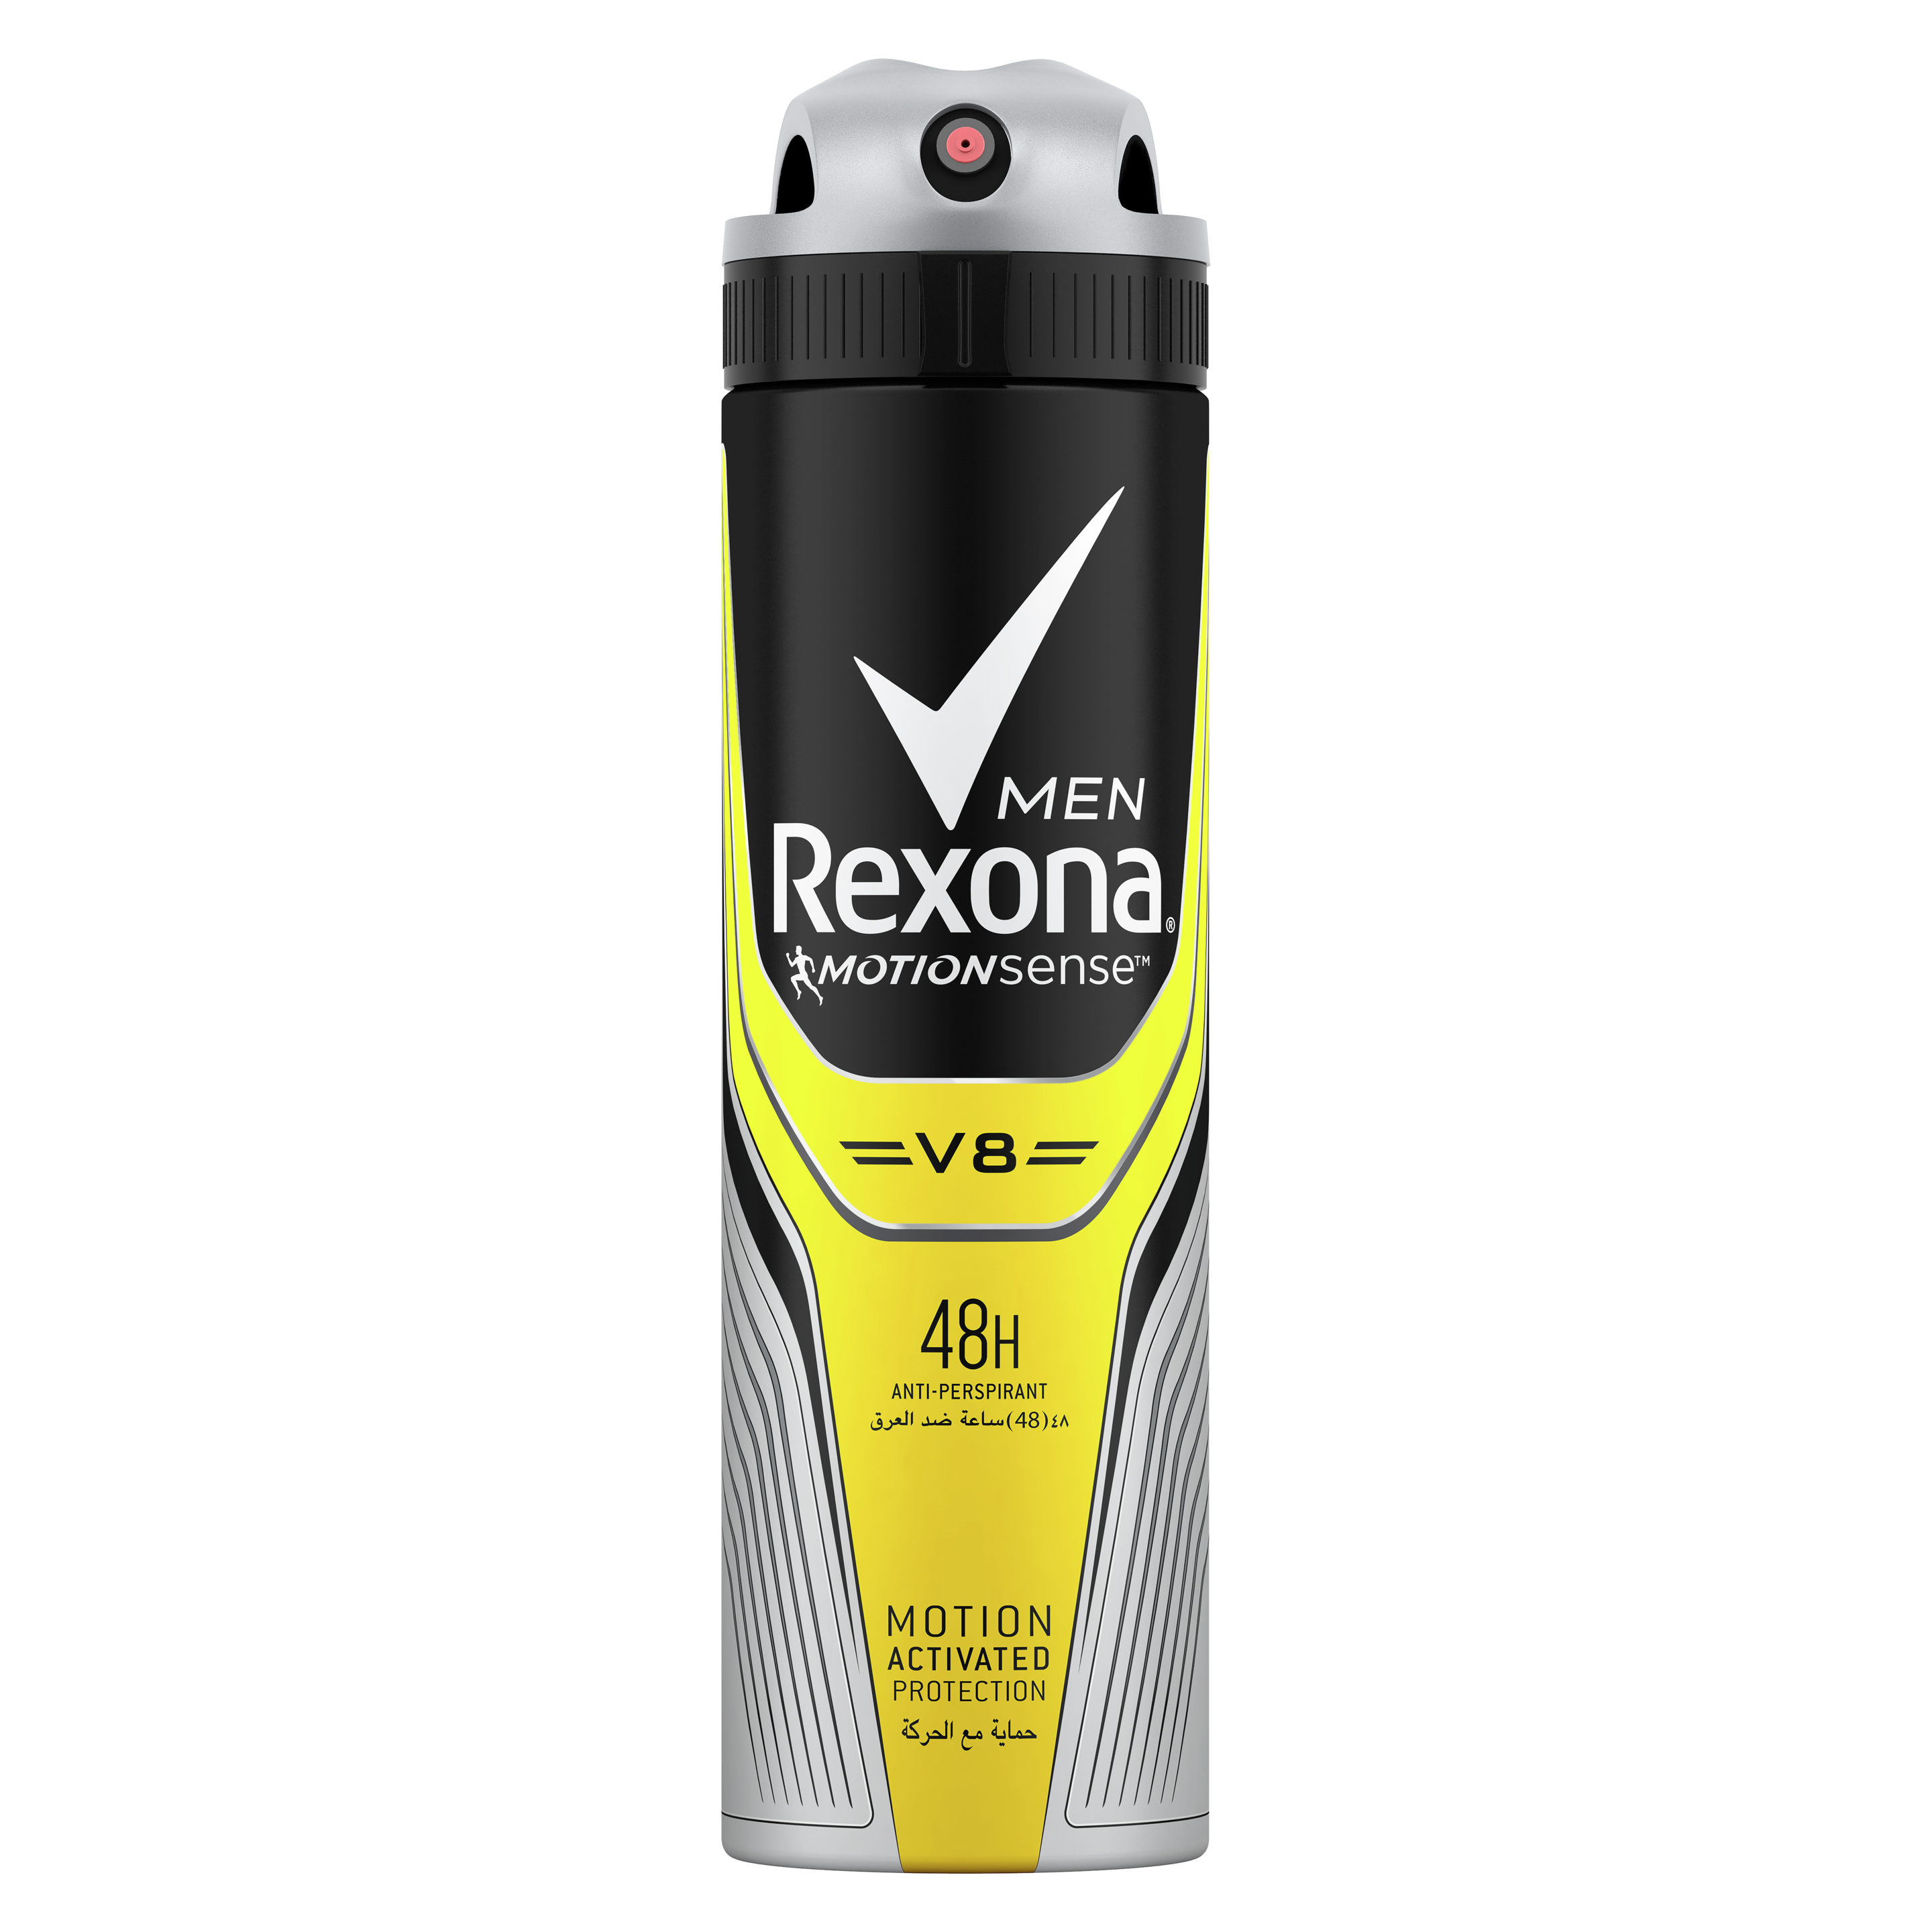 Men V8 Antiperspirant MotionSense Deodorant 150ml